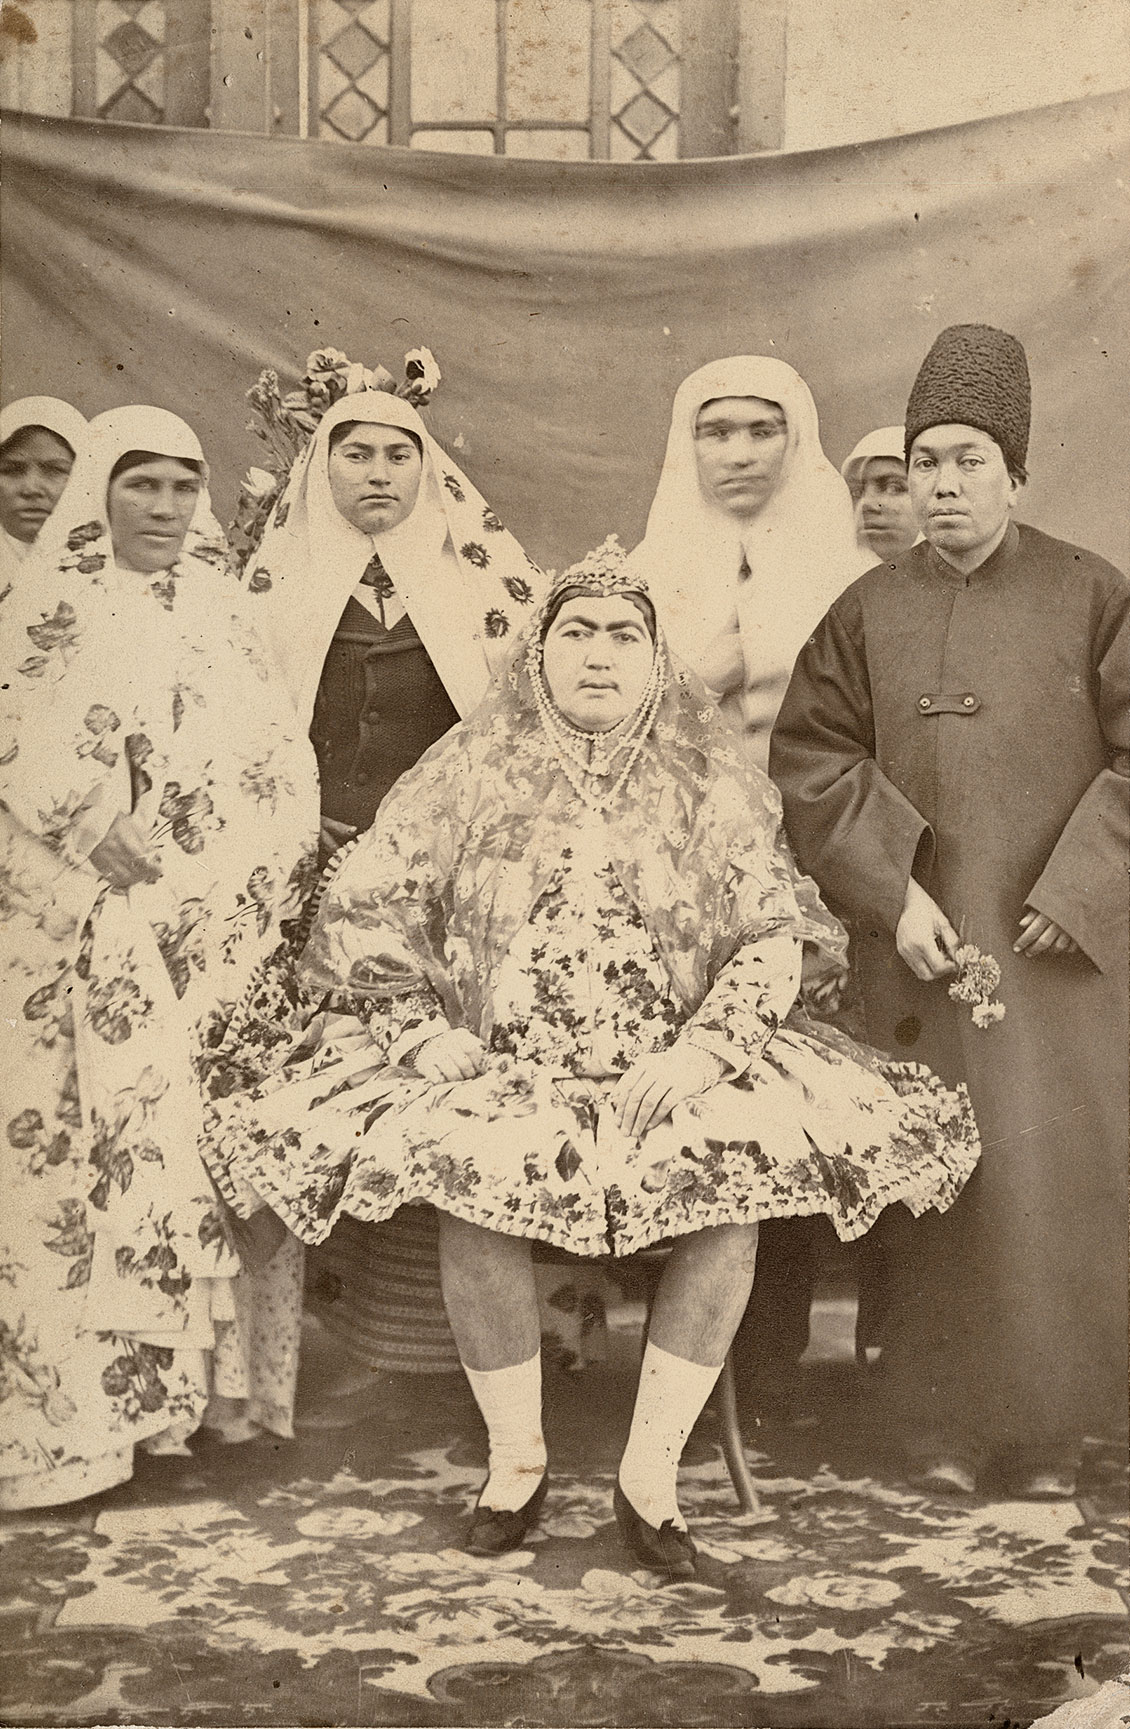 Portrait of Anis al-Dawla and Retinue, taken by Naser al-Din or Reza ʿAkkasbashi, circa 1870-80 